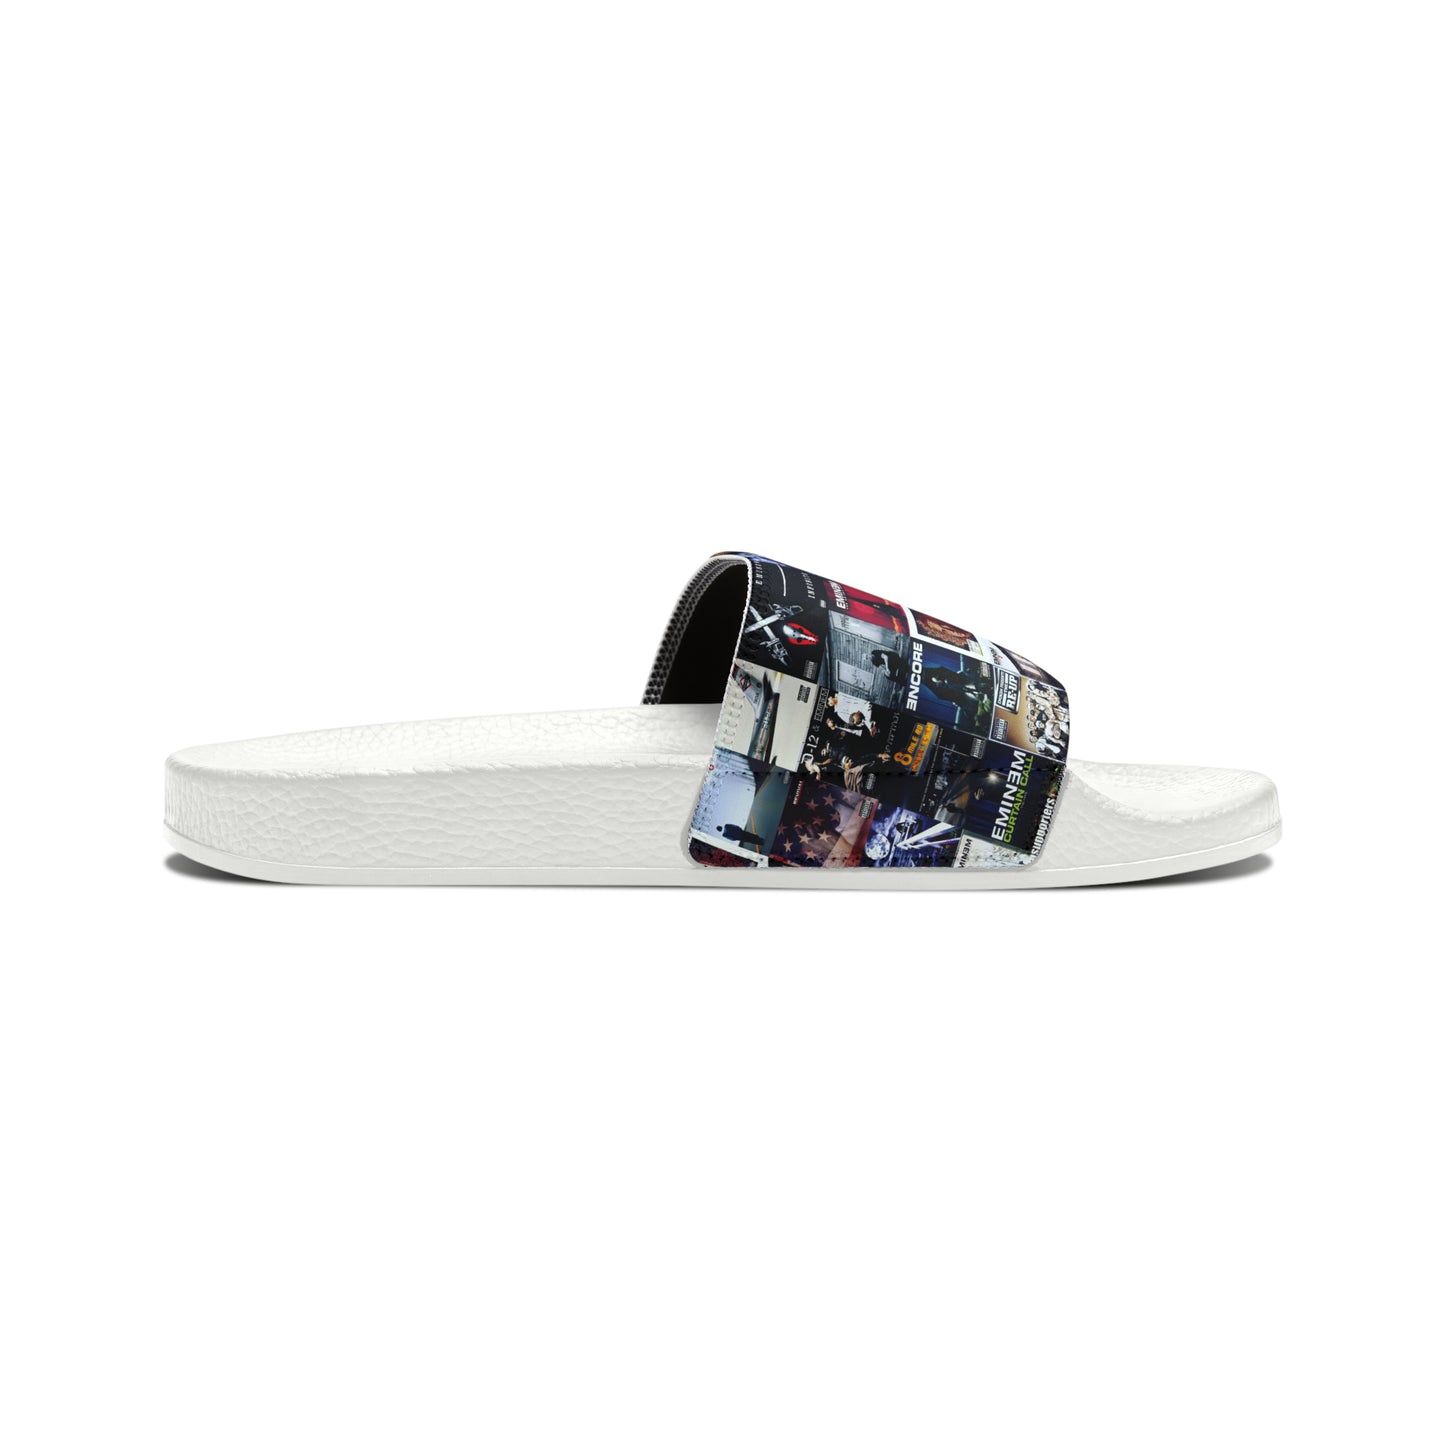 Eminem Album Art Cover Collage Men's Slide Sandals